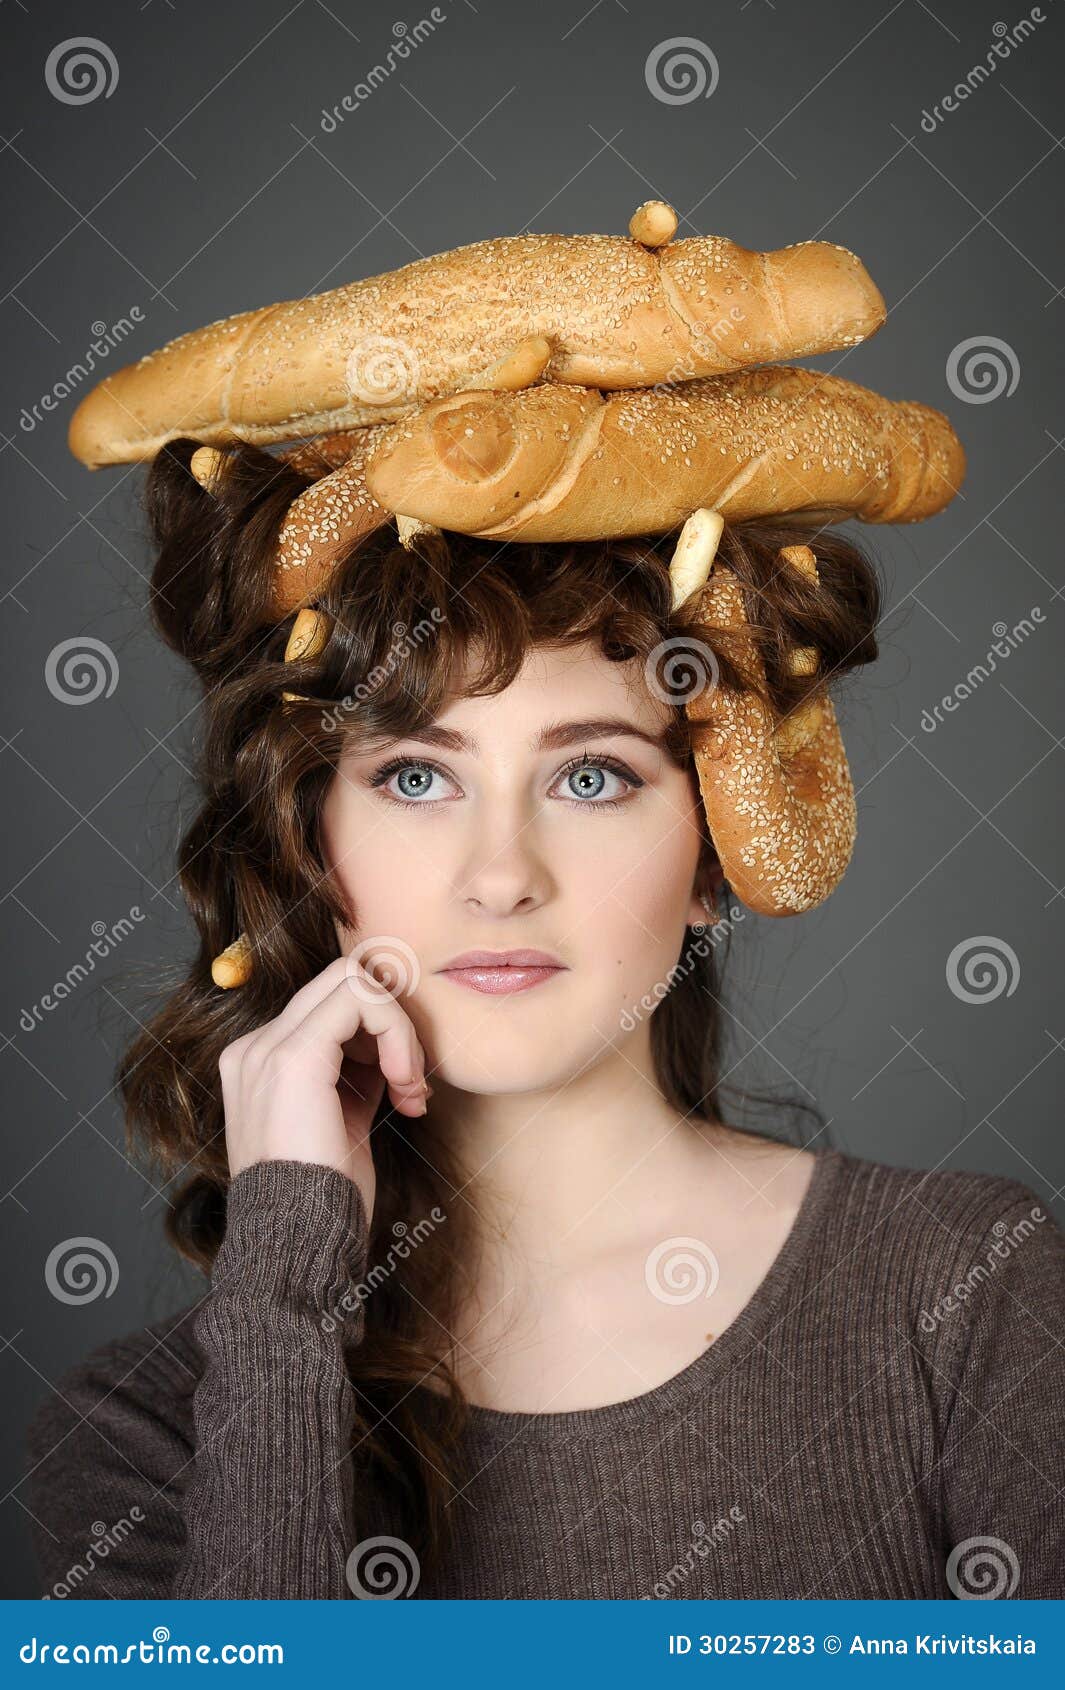 girl-bread-rolls-30257283.jpg